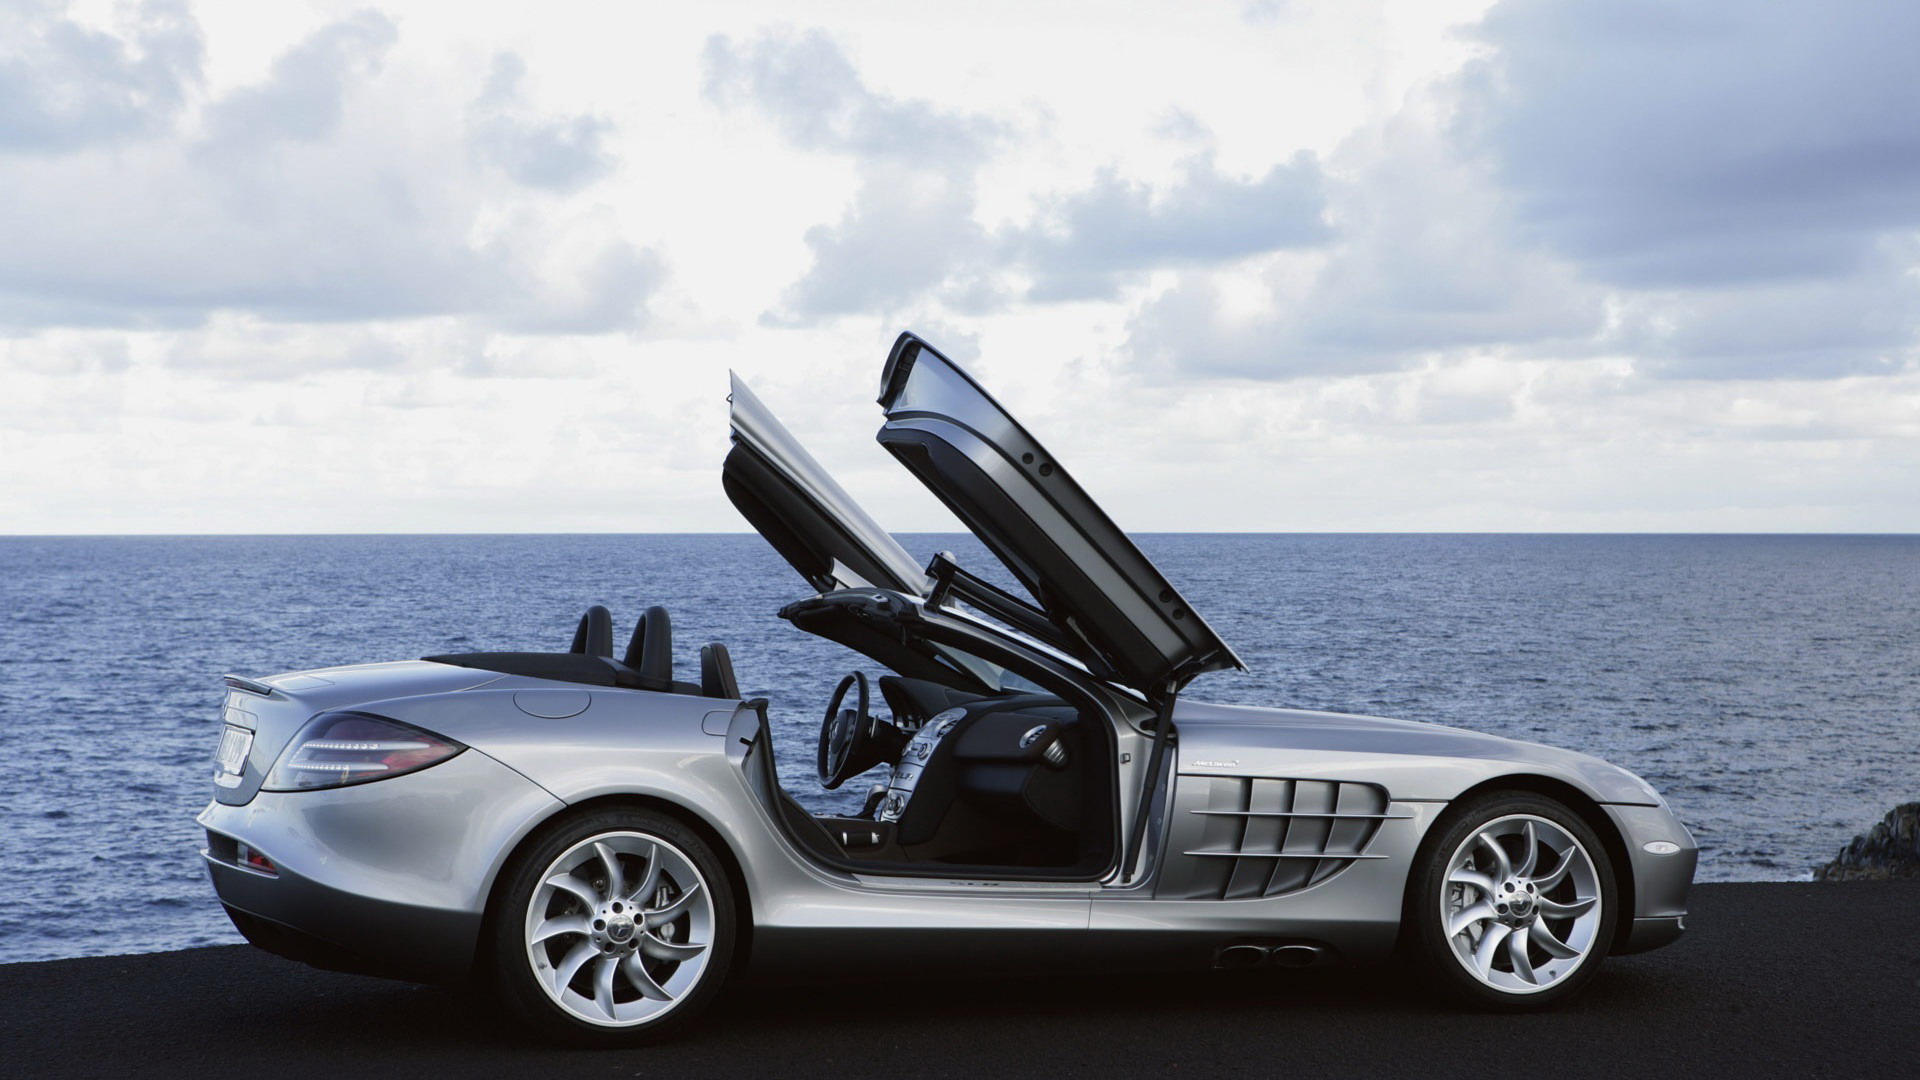 Mercedes Benz Wallpaper Slr Image